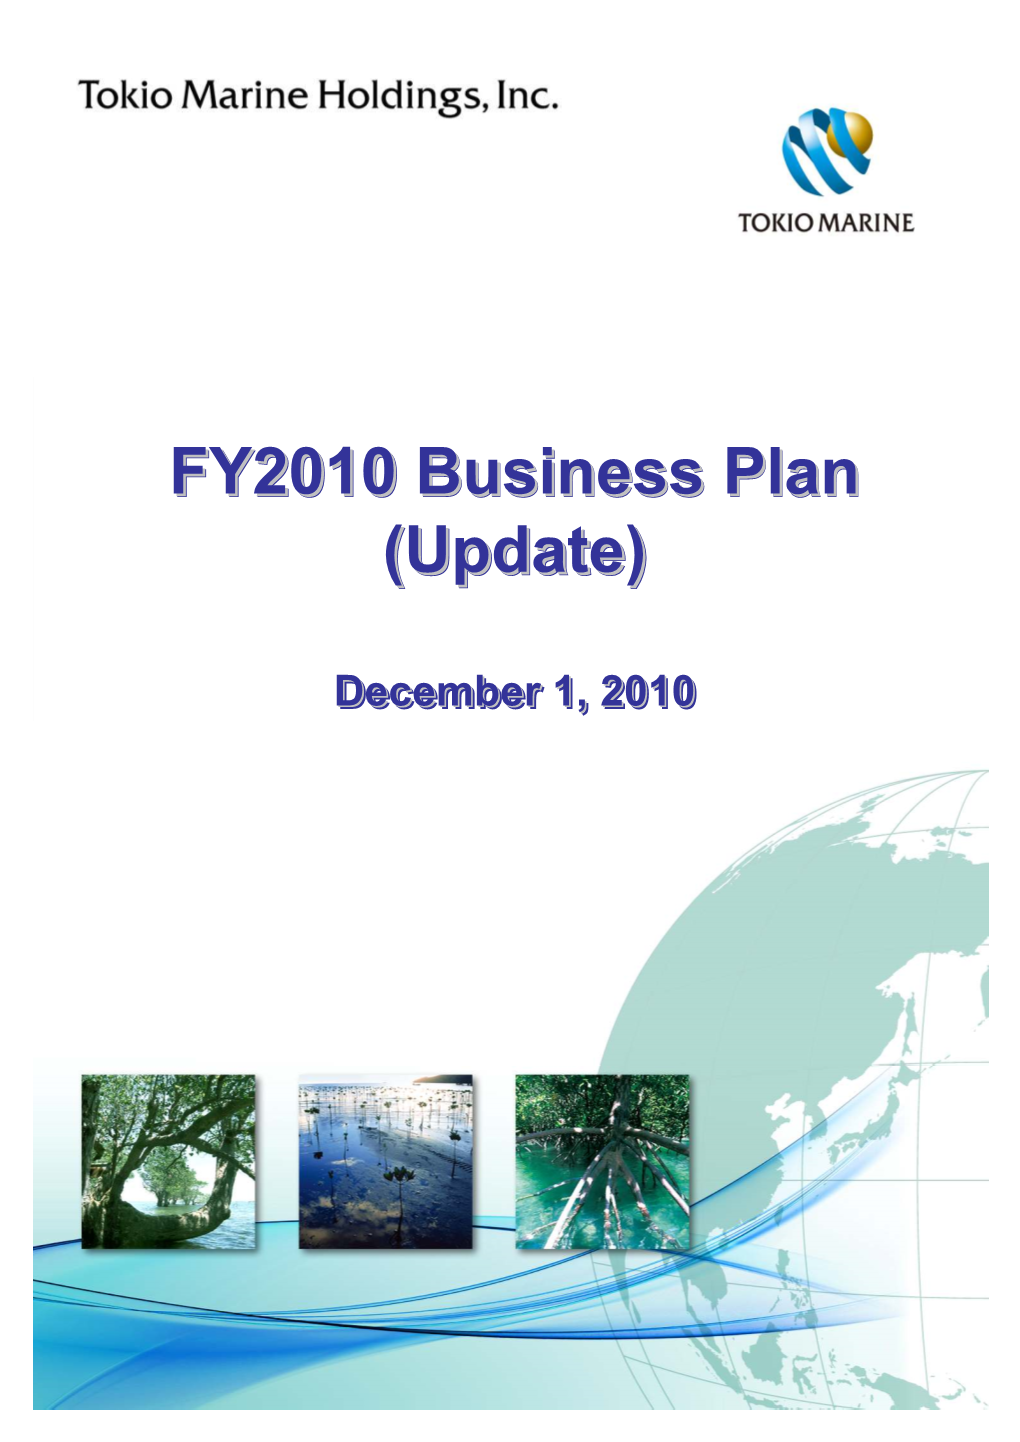 (Update) FY2010 Business Plan